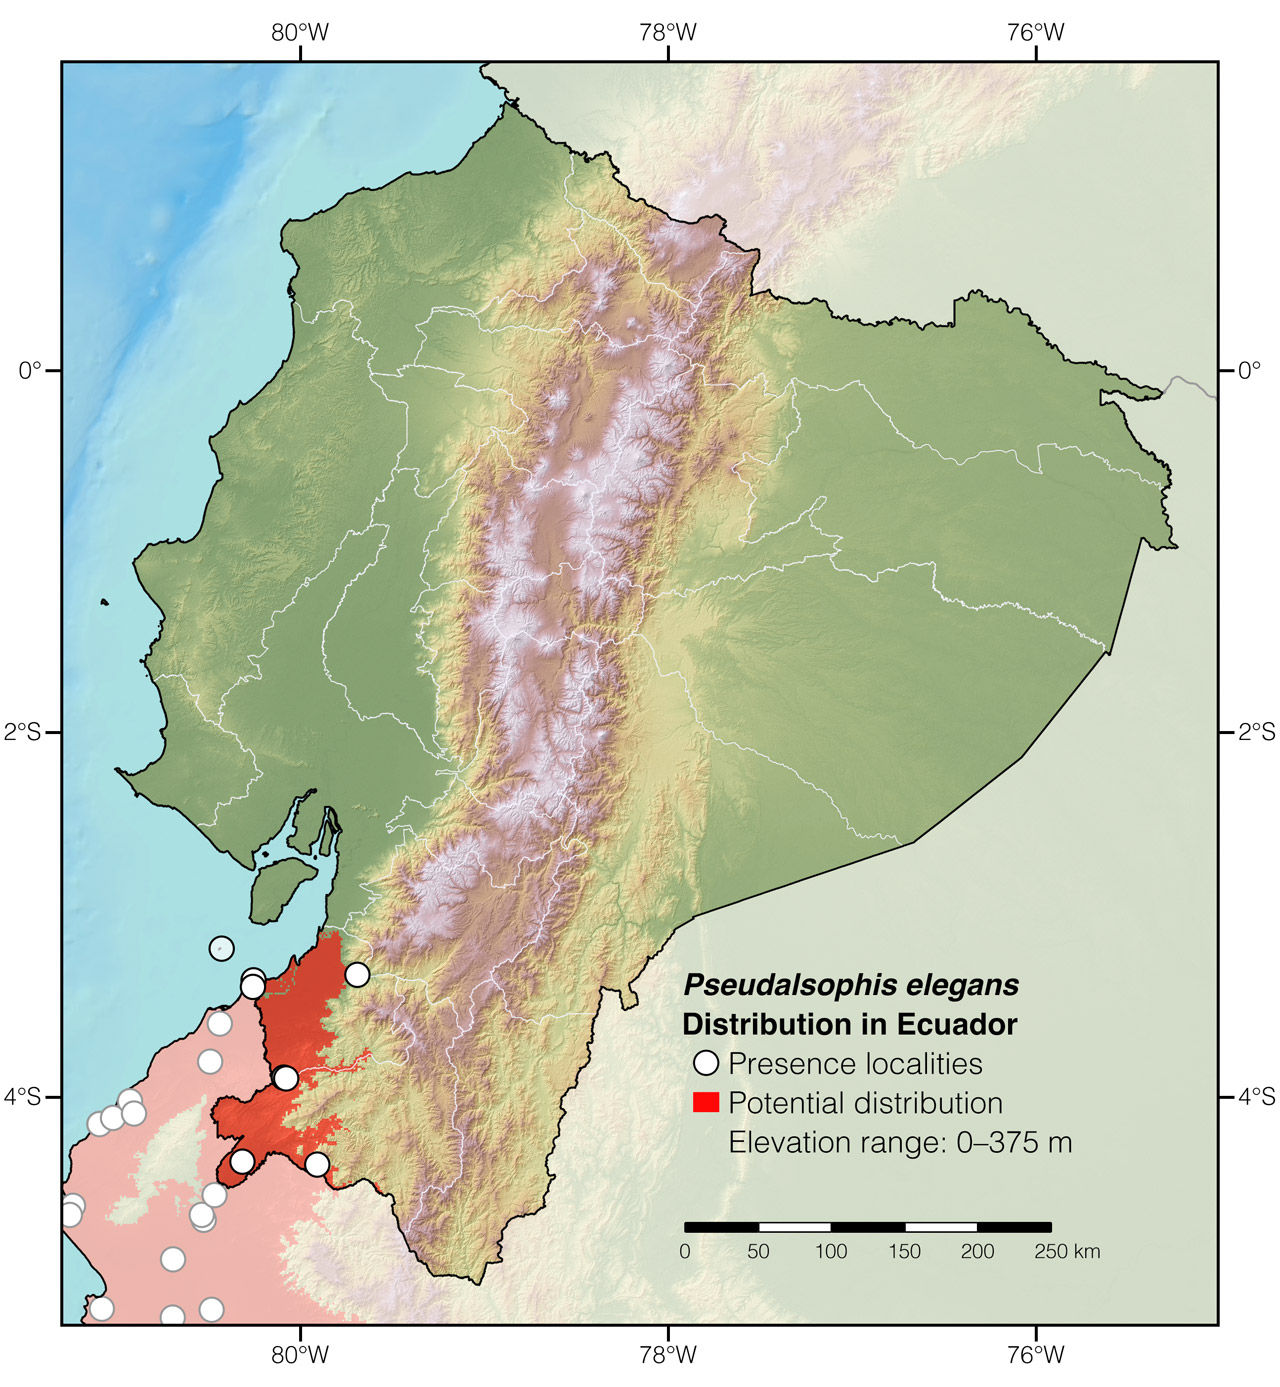 Distribution of Pseudalsophis elegans in Ecuador